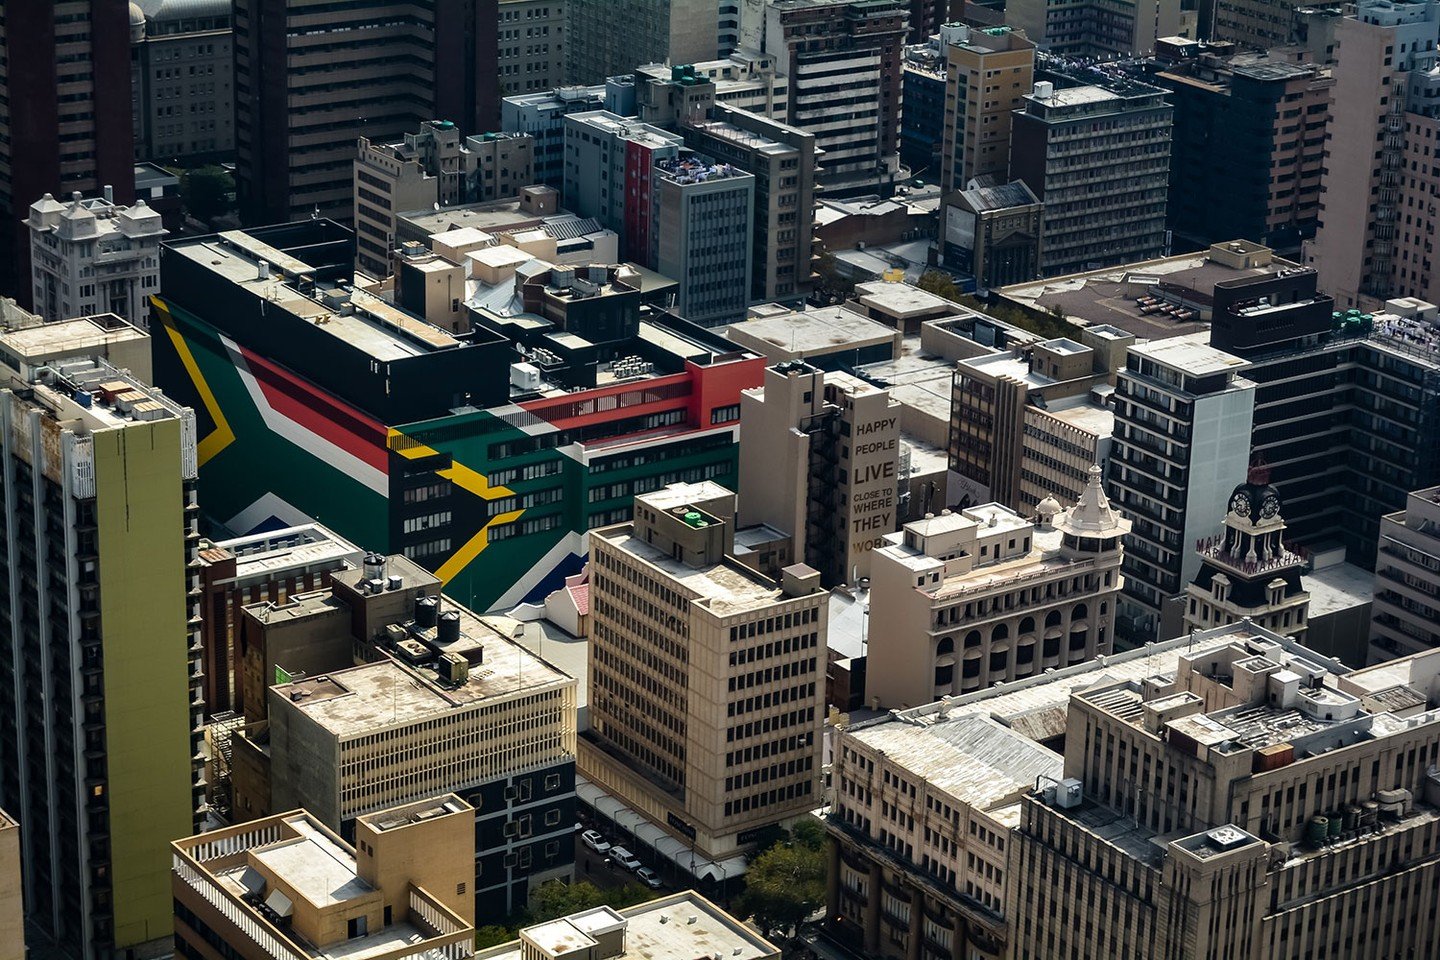 Buildings in South Africa